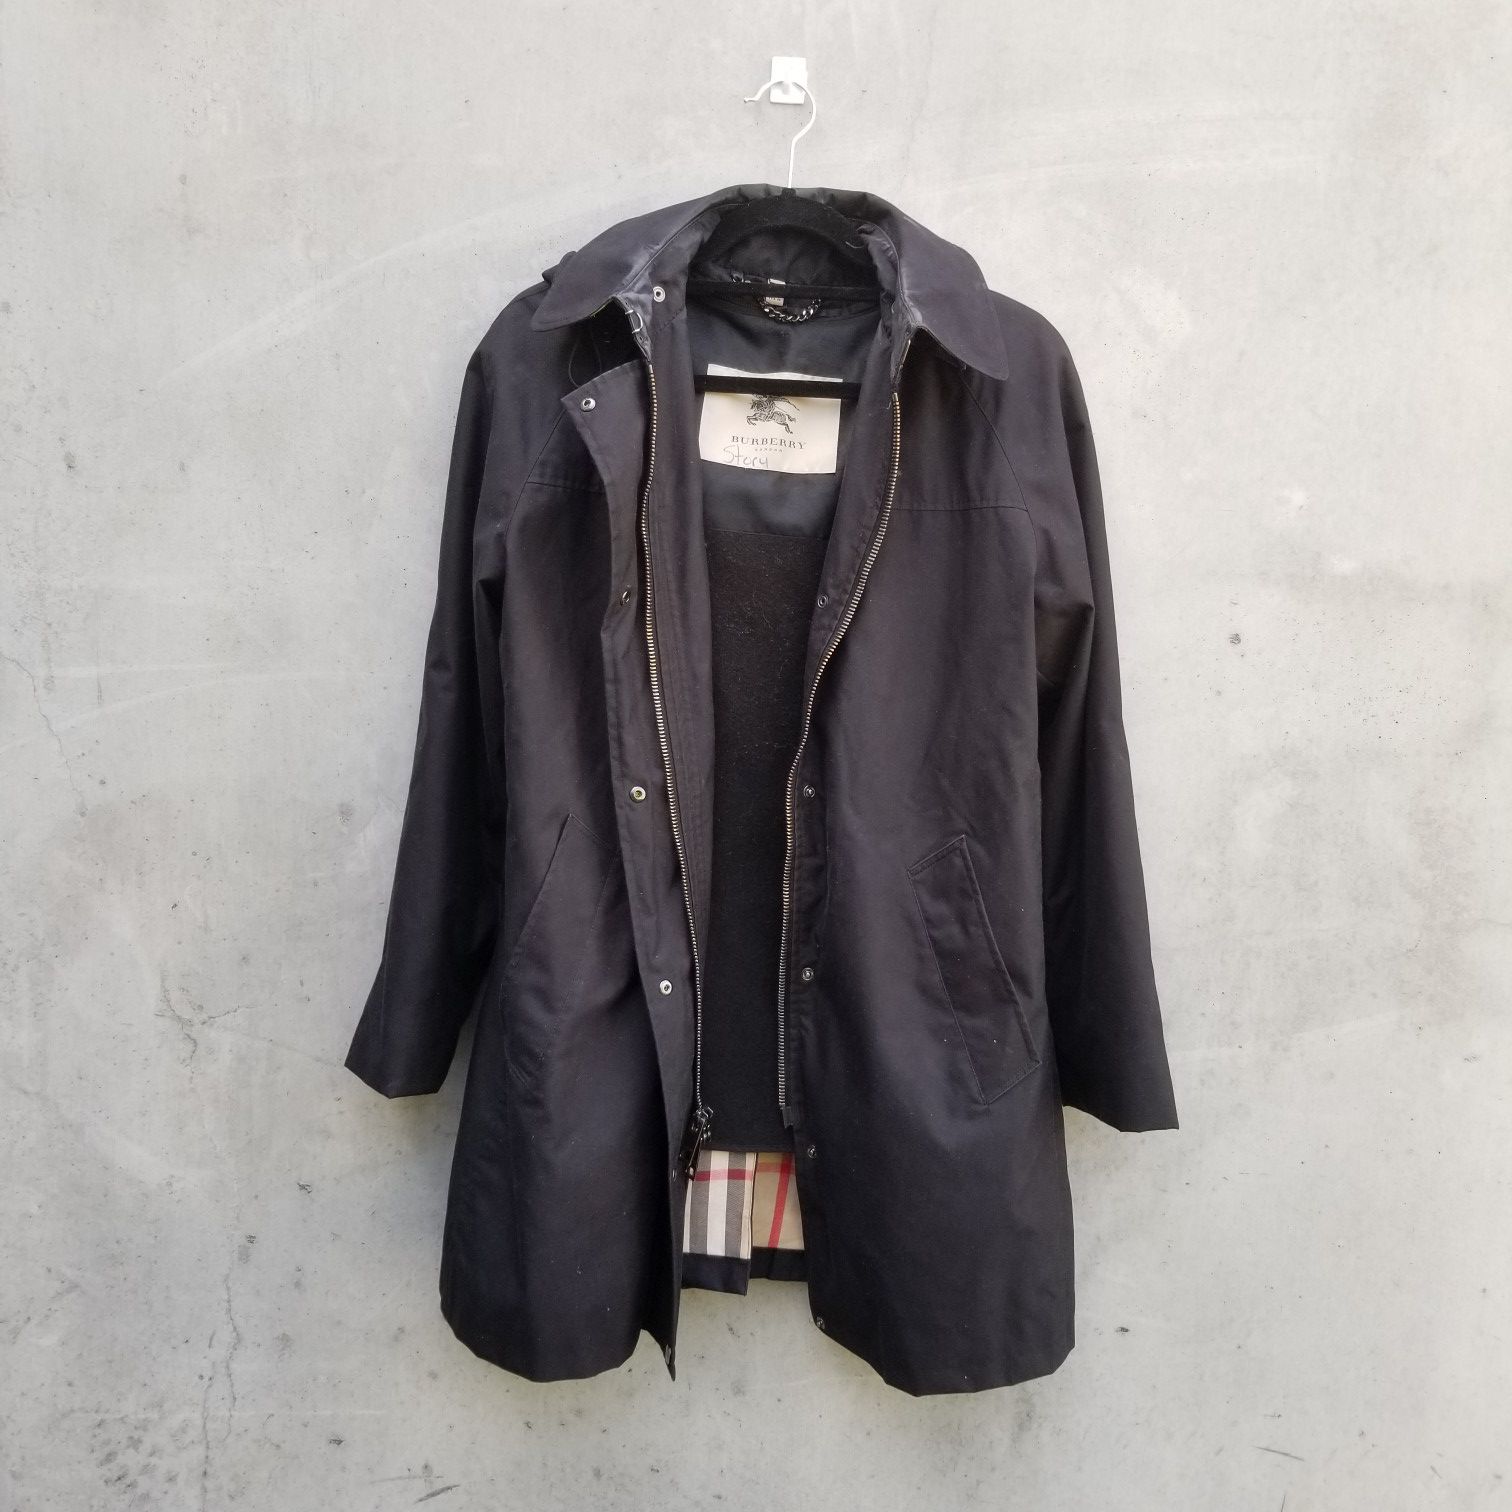 Burberry womens size 10 black raincoat